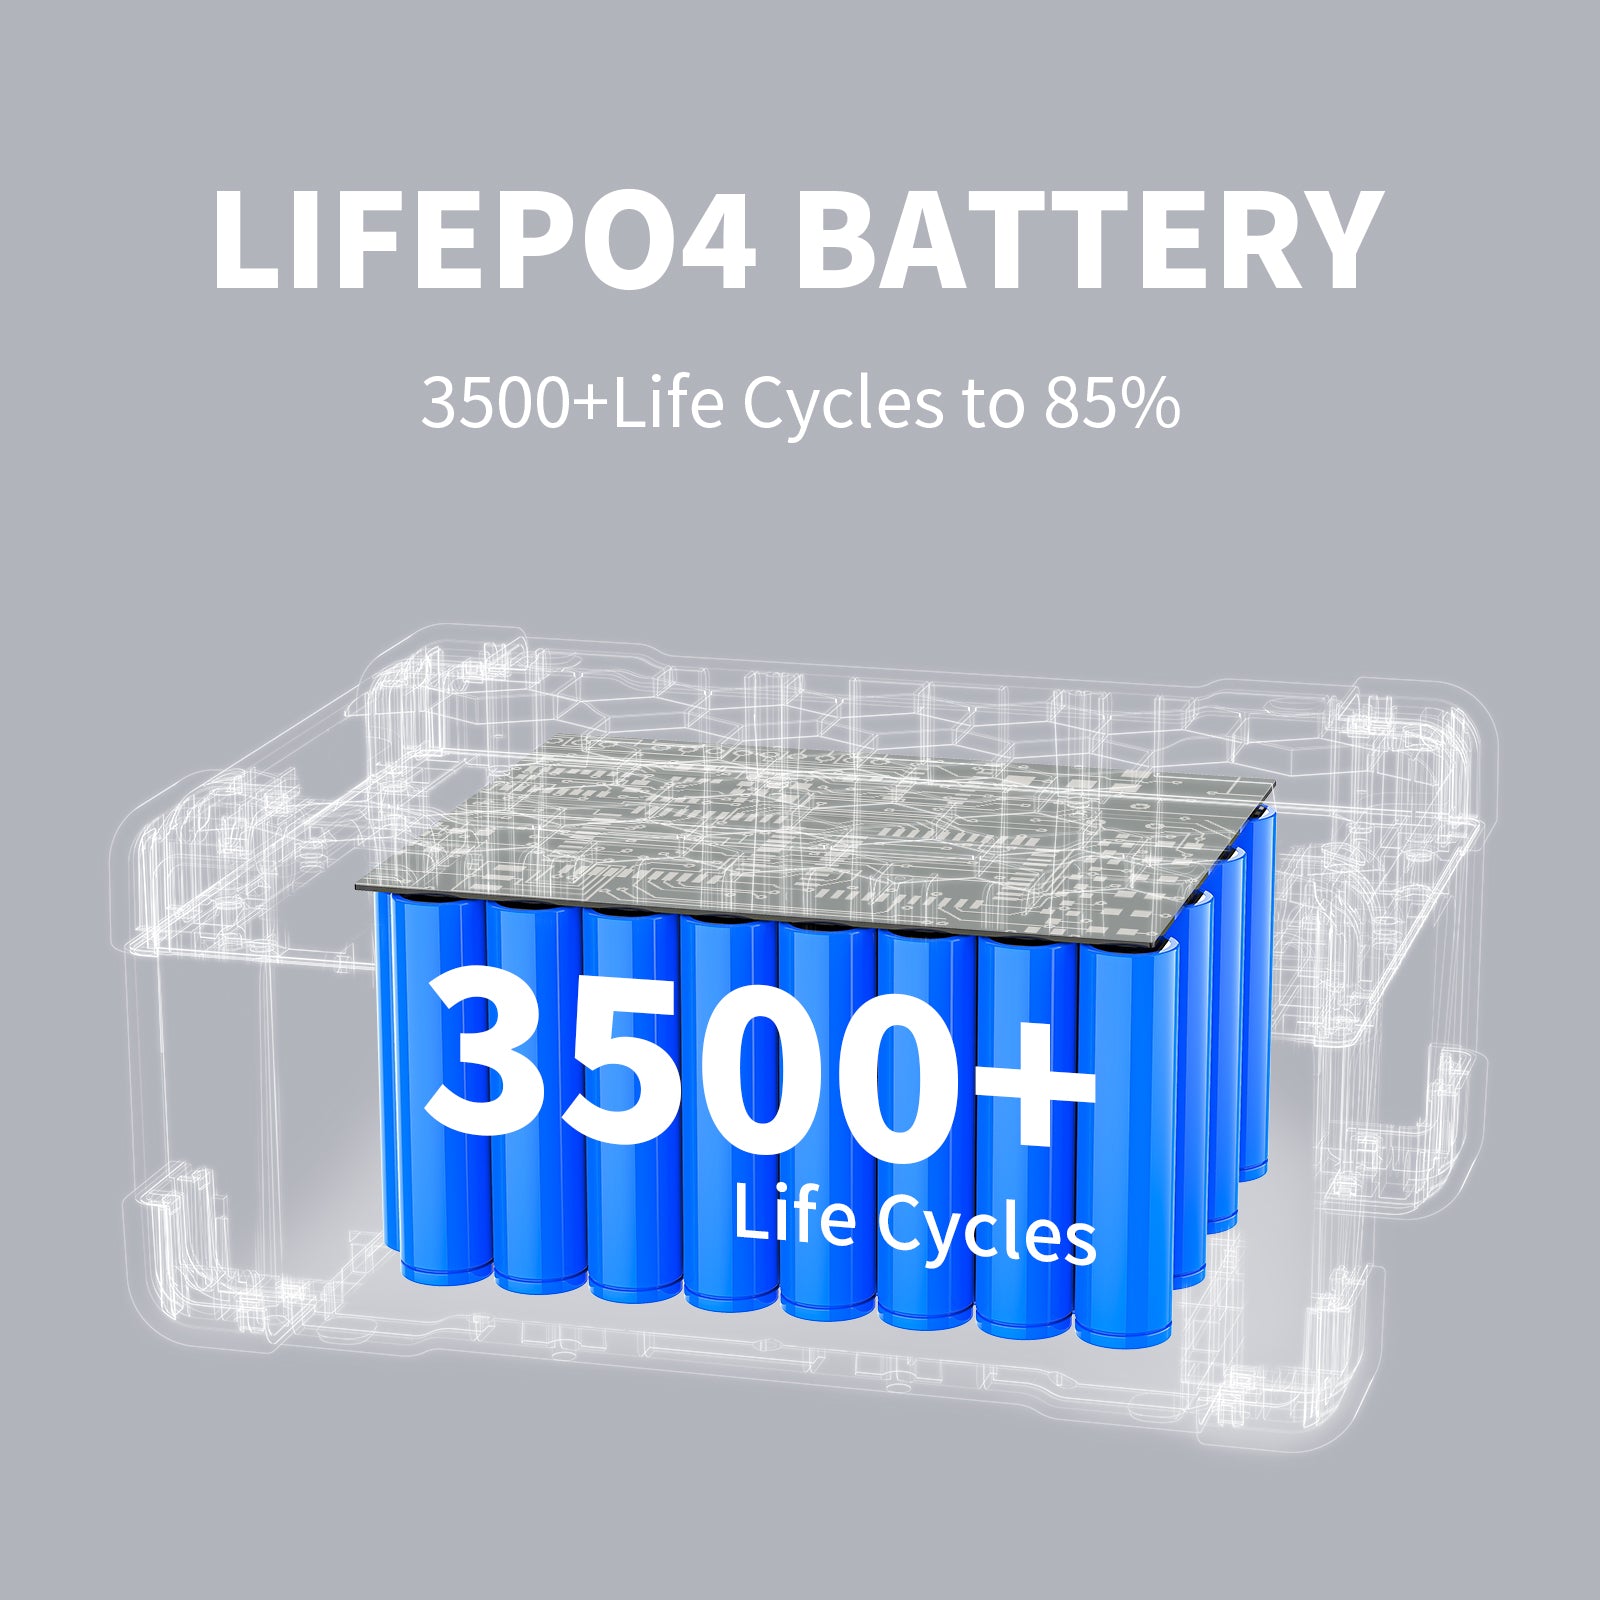 PECRON EB3000 Expansion Battery 3072Wh